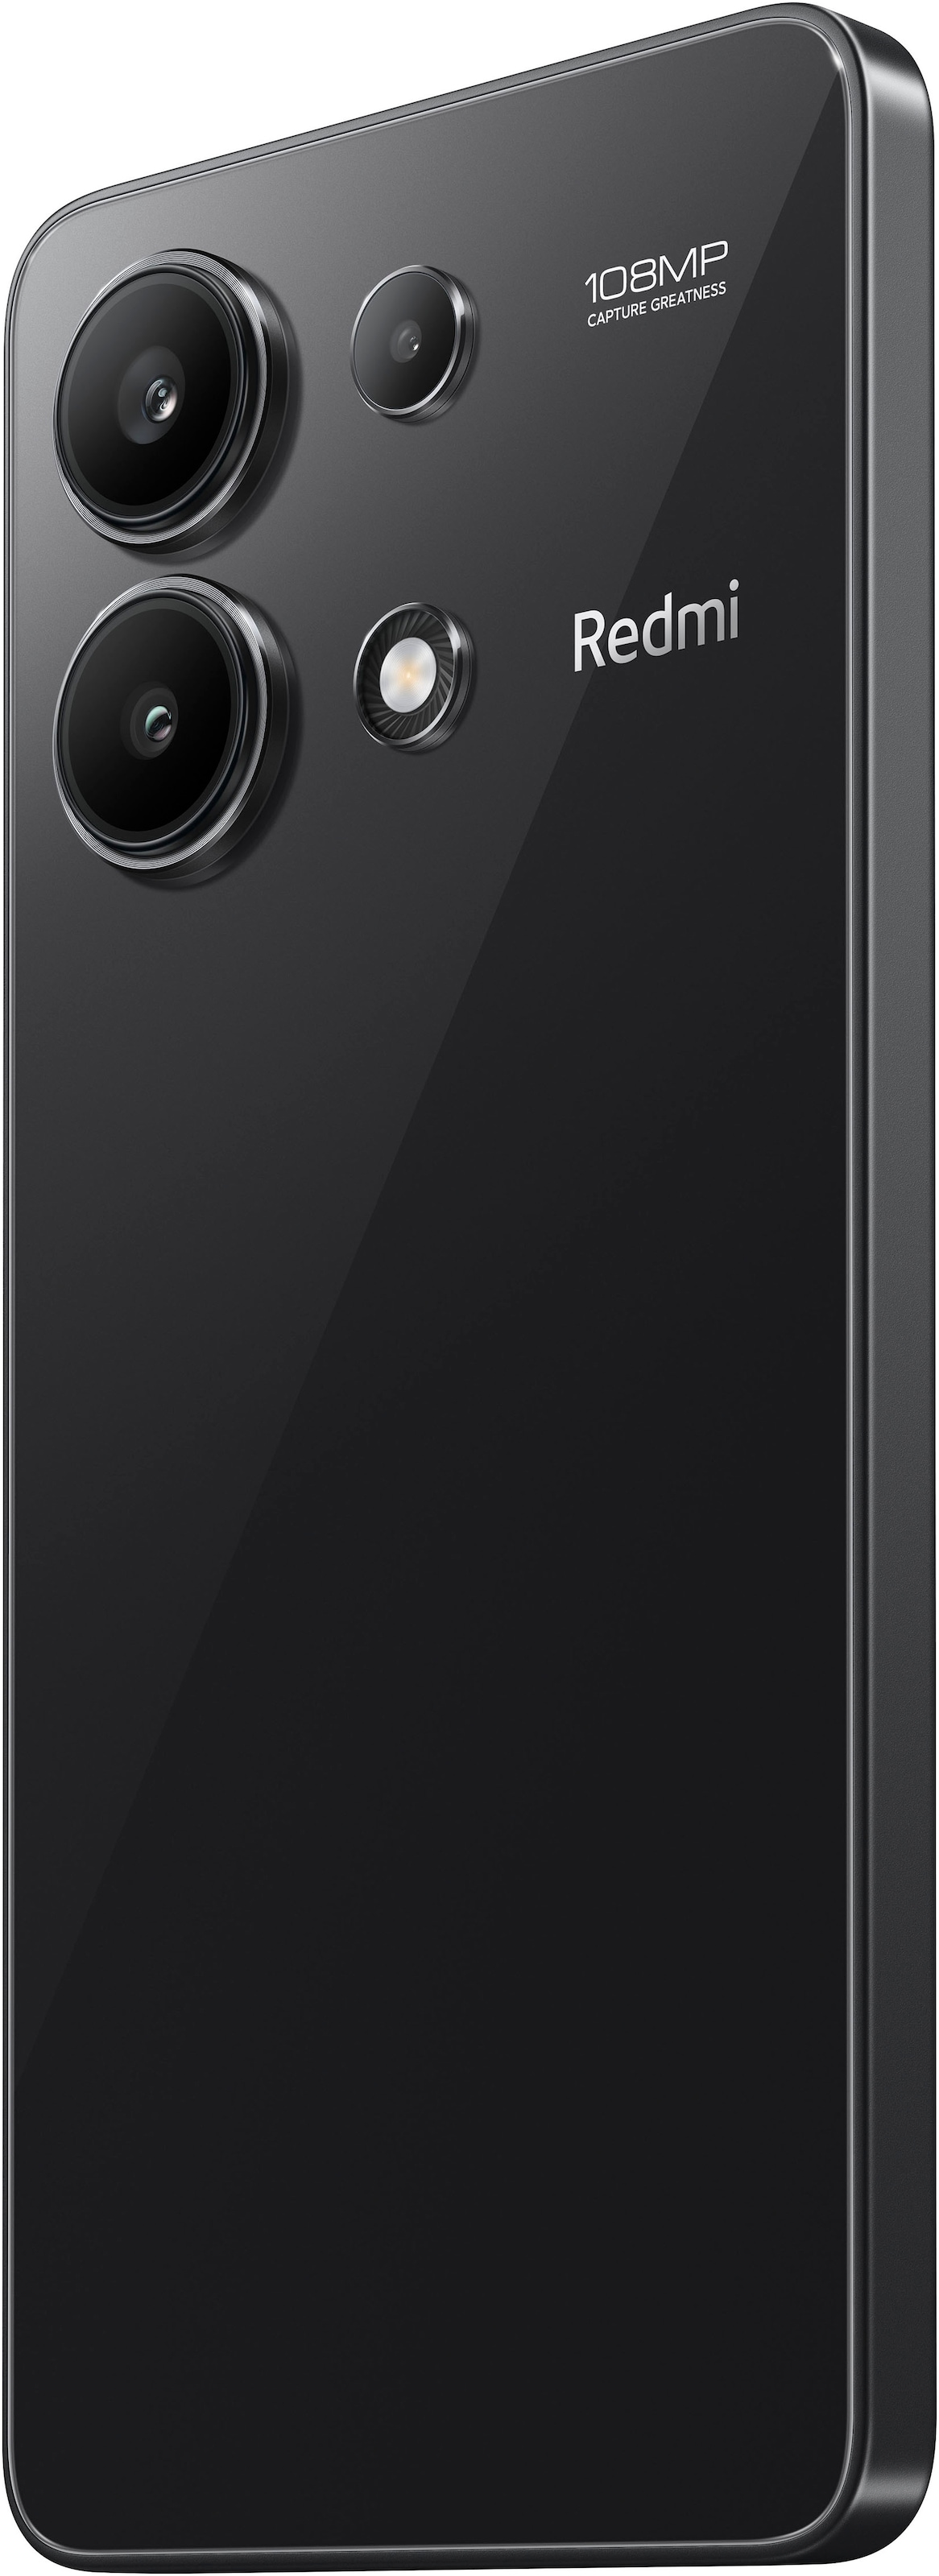 Xiaomi Smartphone »Redmi Note 13 8+128 GB«, Midnight Black, 16,94 cm/6,67 Zoll, 128 GB Speicherplatz, 108 MP Kamera